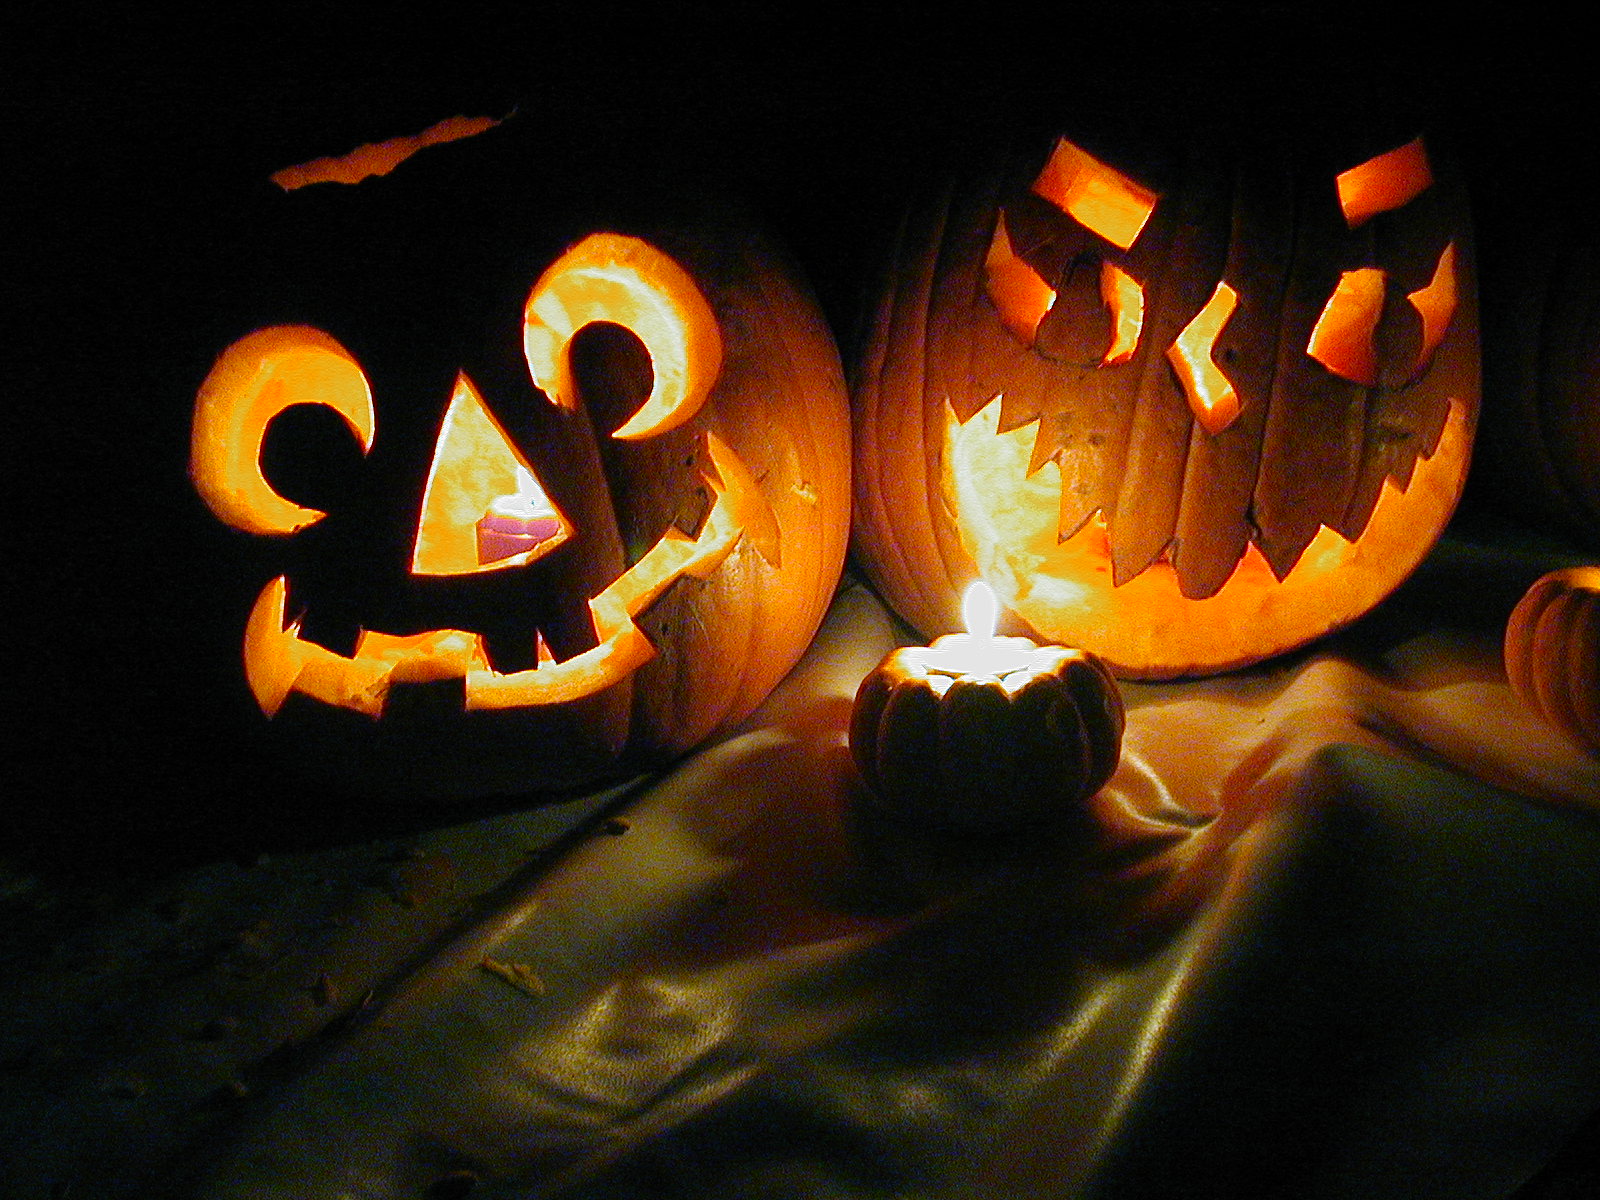 “Carving Pumpkins” blog by Cara